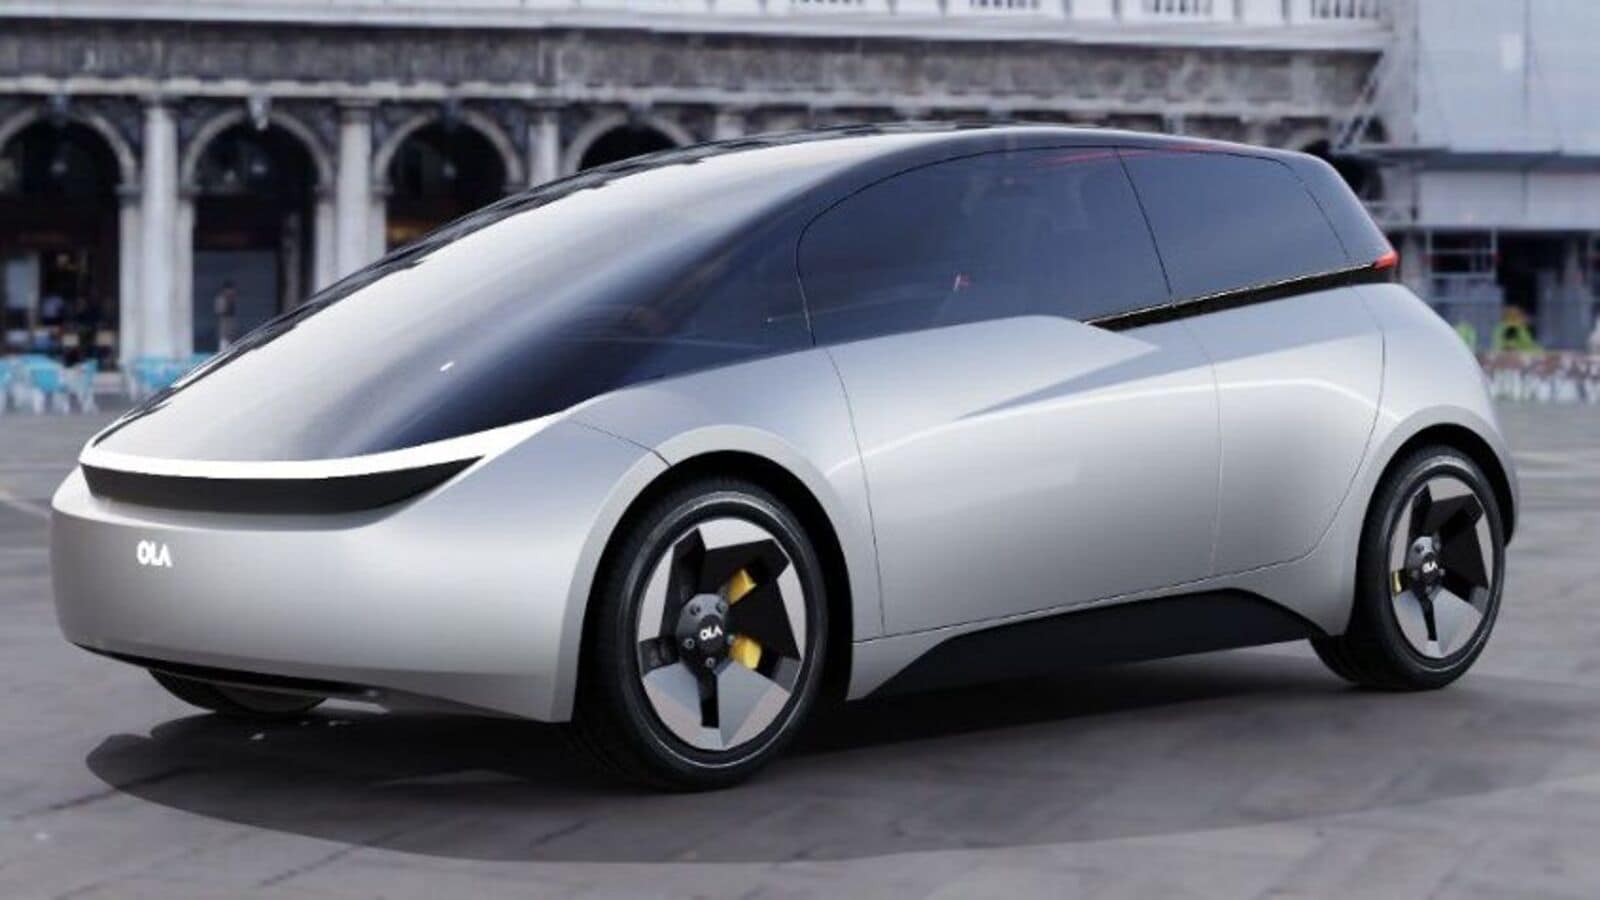 ola electric car 2023 design concept teased: key facts we know so far | car news